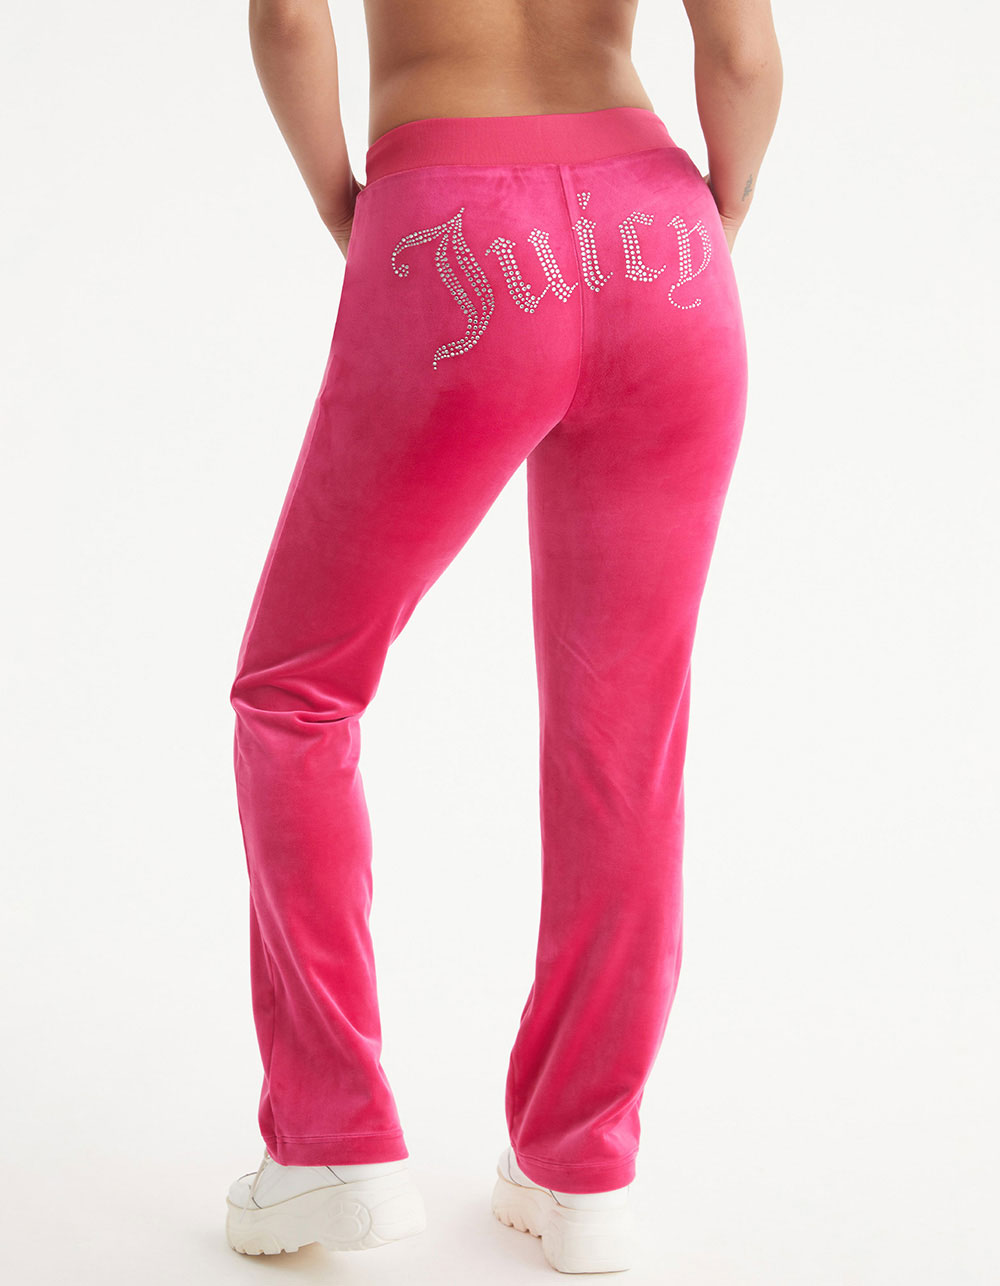 Juicy couture New XS Top S Pants Tracksuit Set